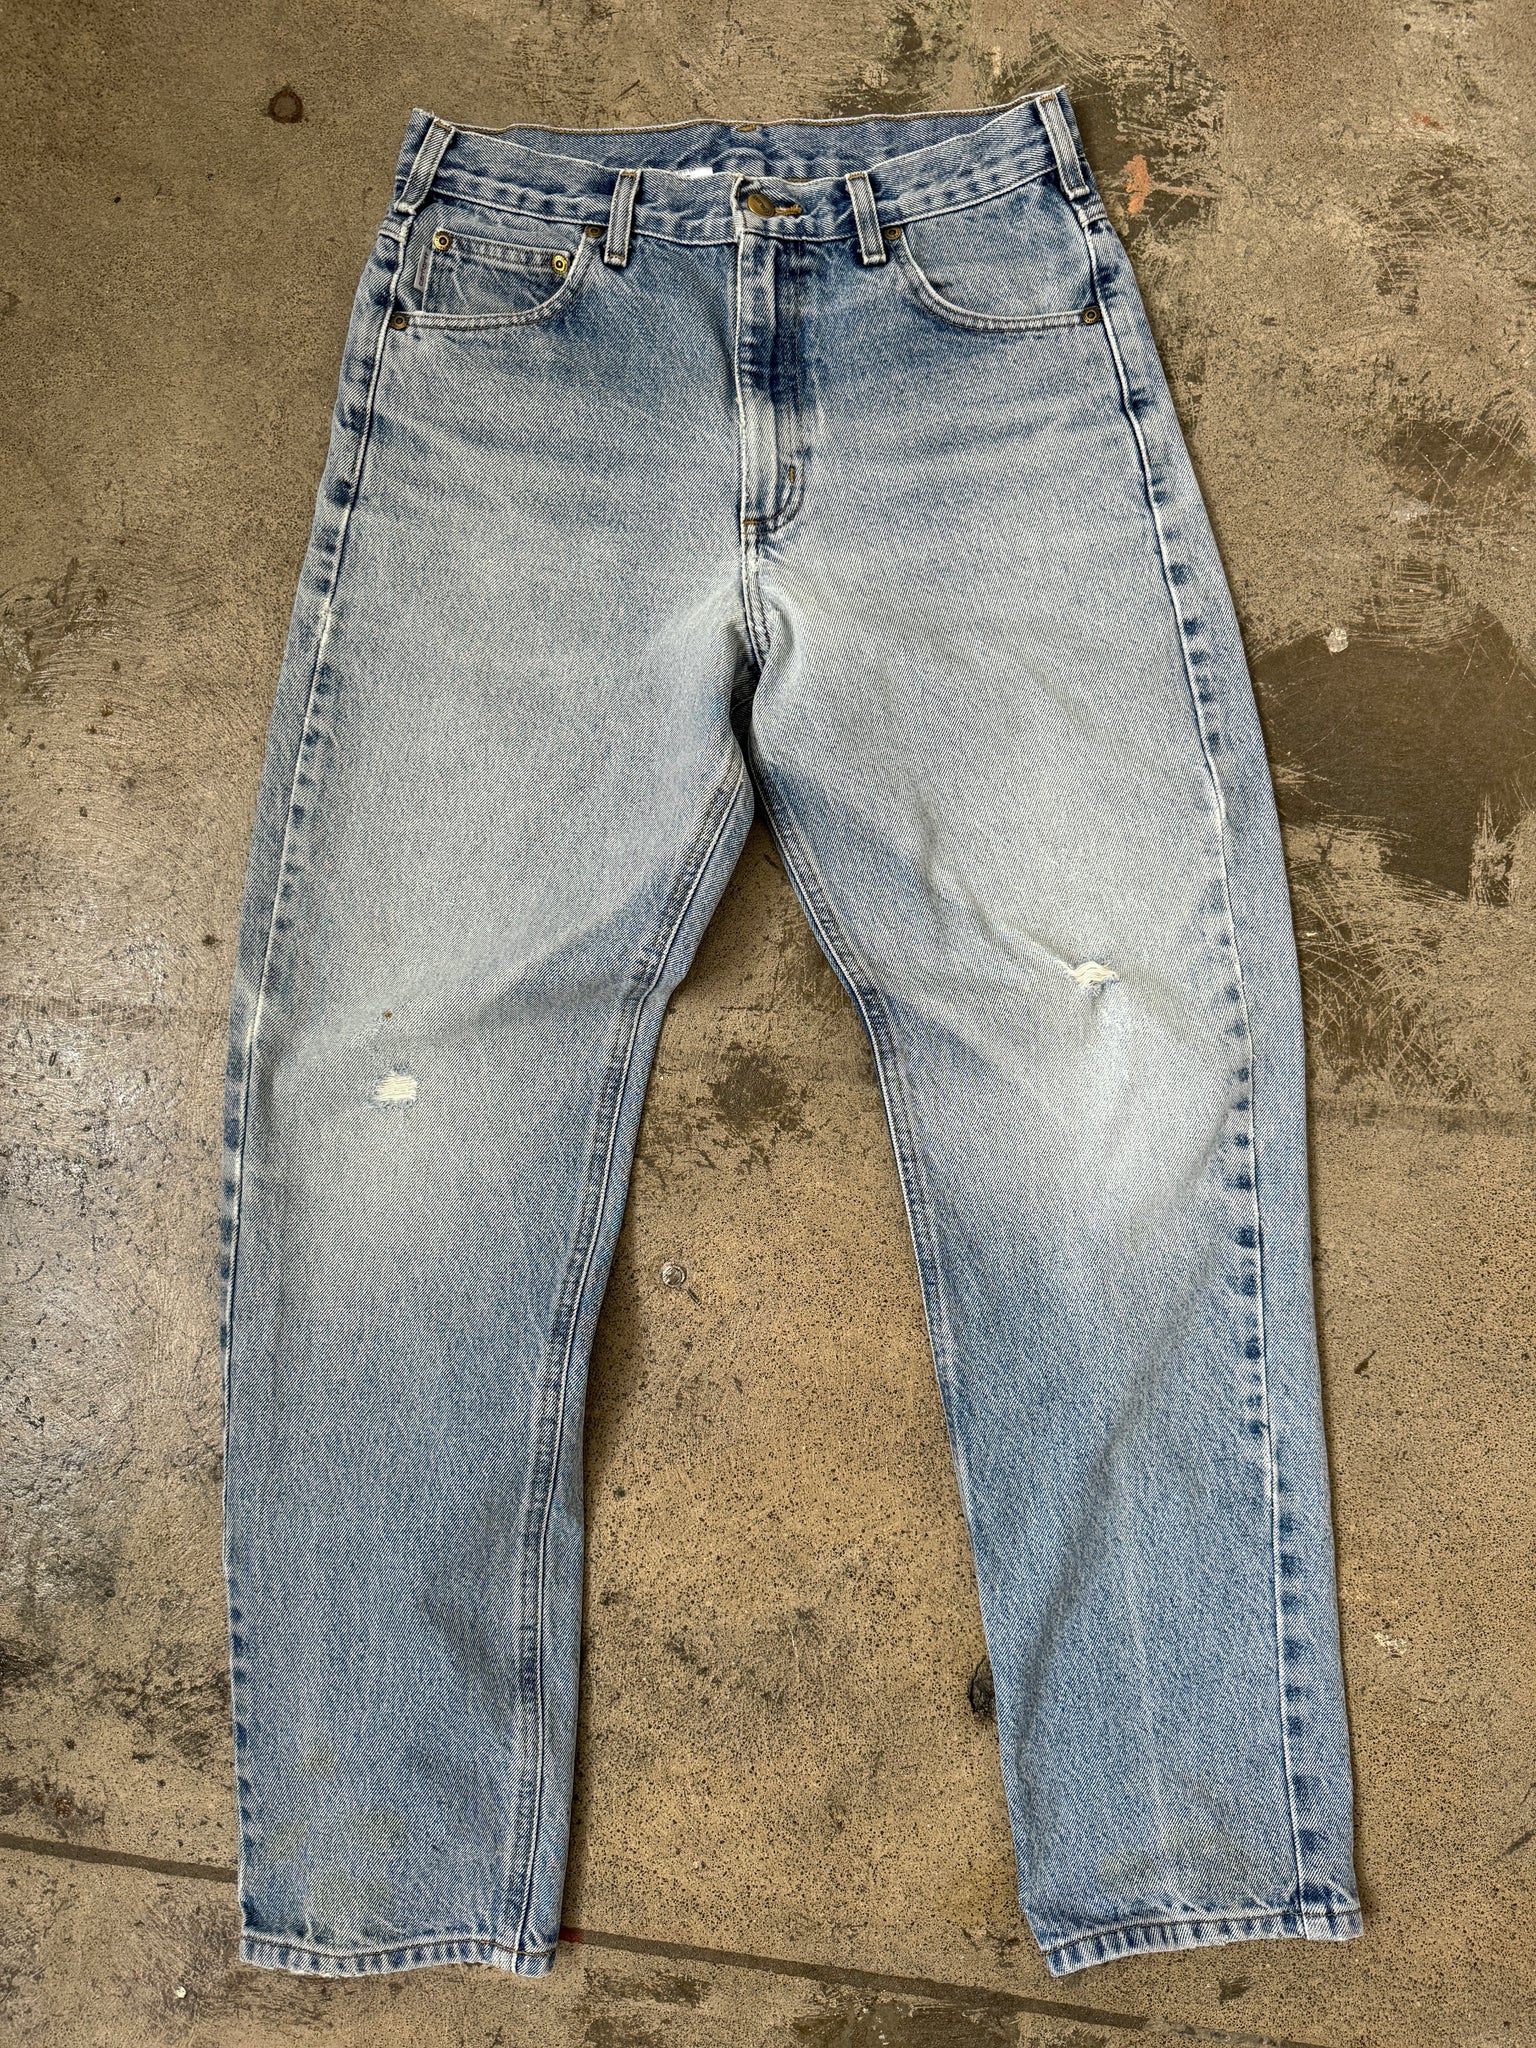 Vintage Carhartt Jeans (31)